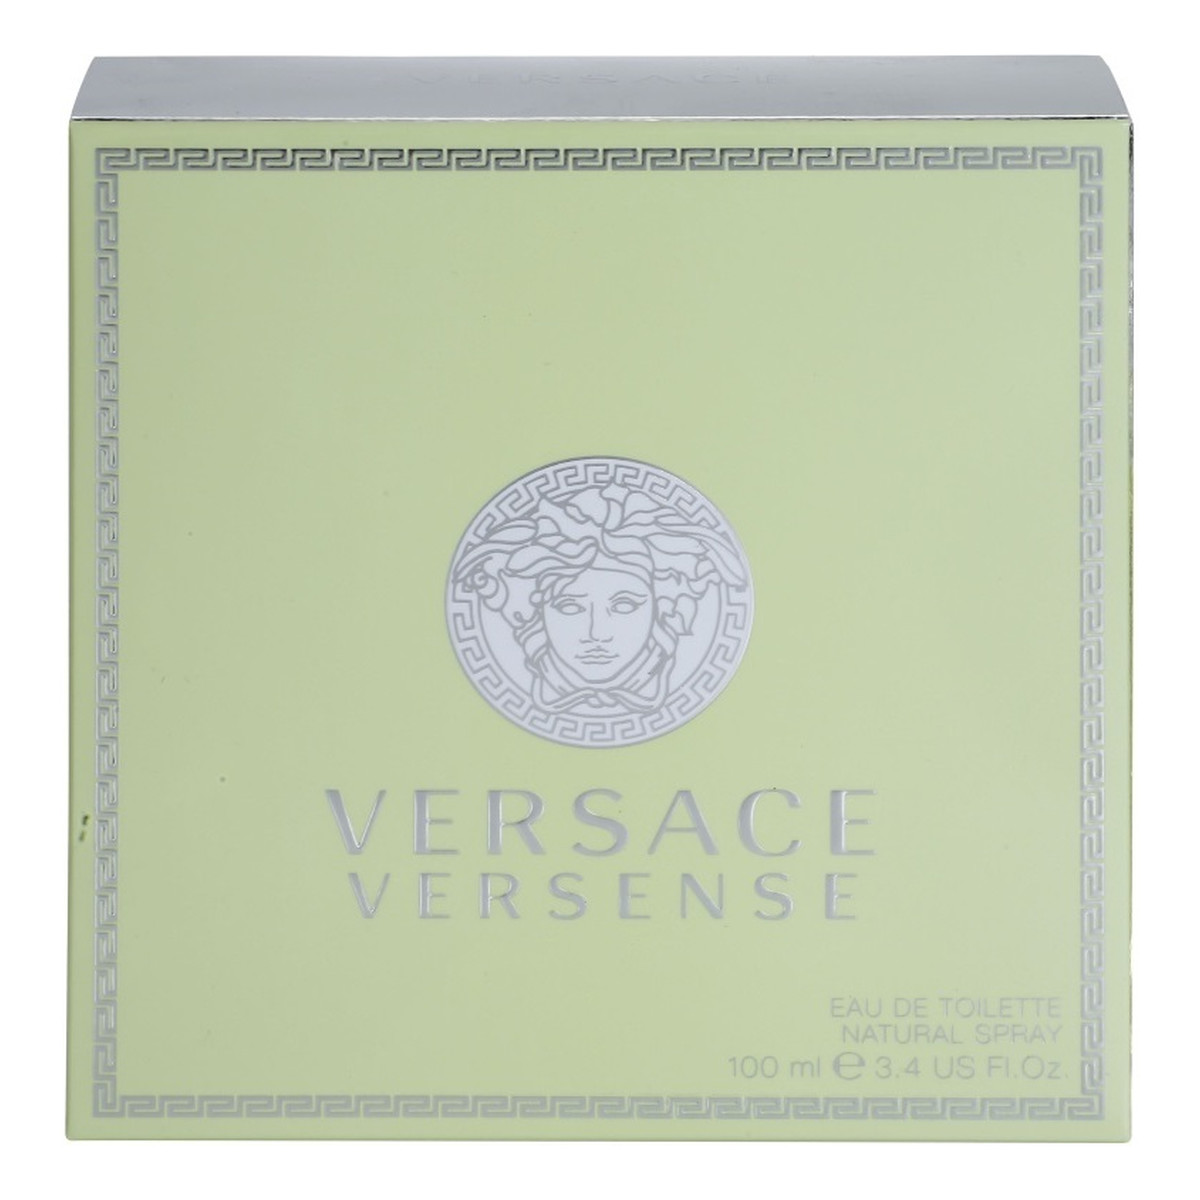 Versace Versense Woda toaletowa dla kobiet 100ml